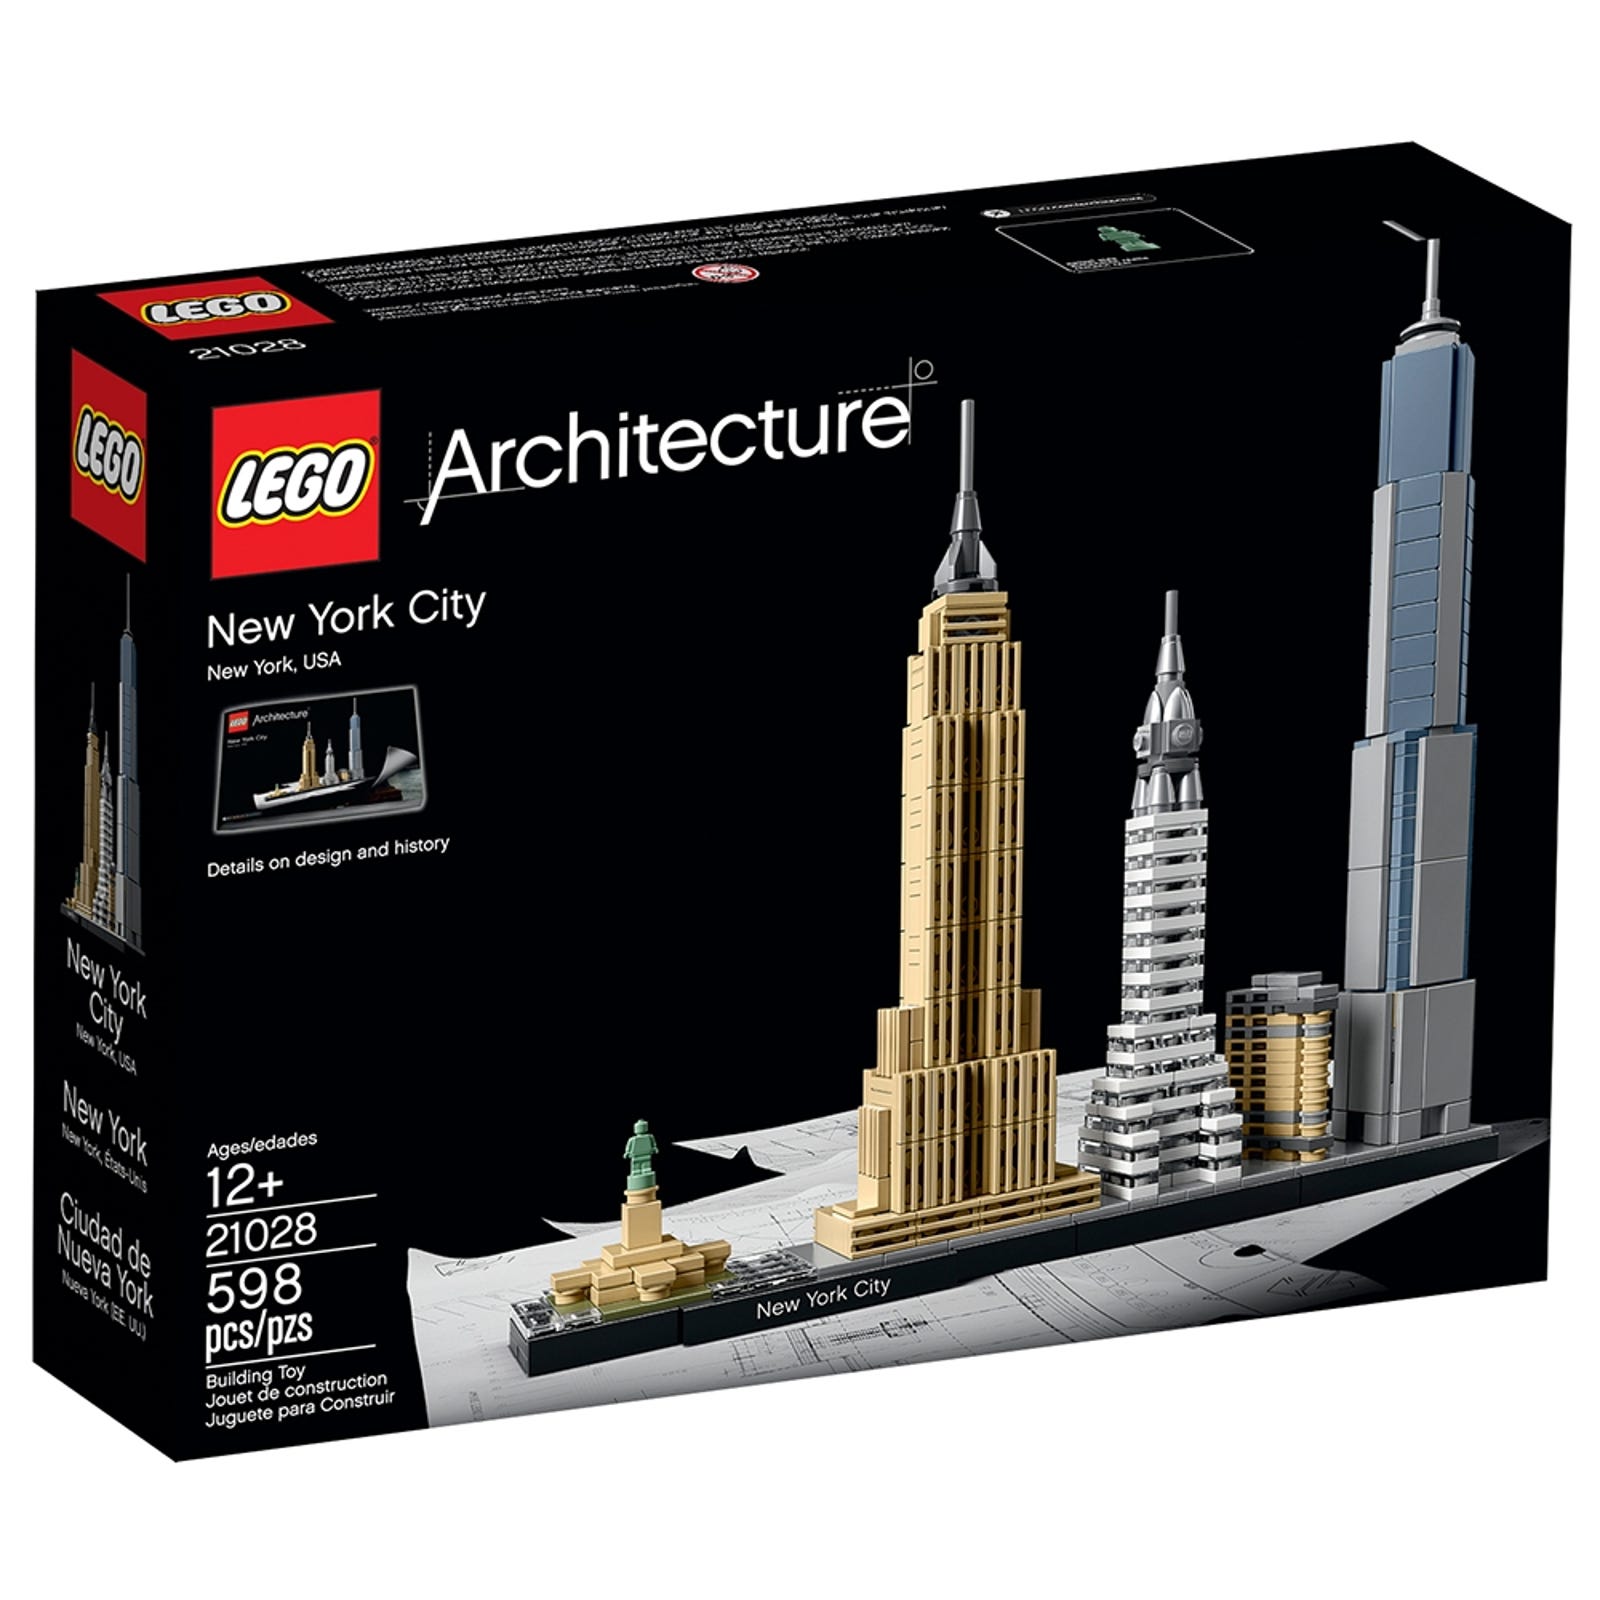 LEGO® Architecture 21028 - New York City - Box Front